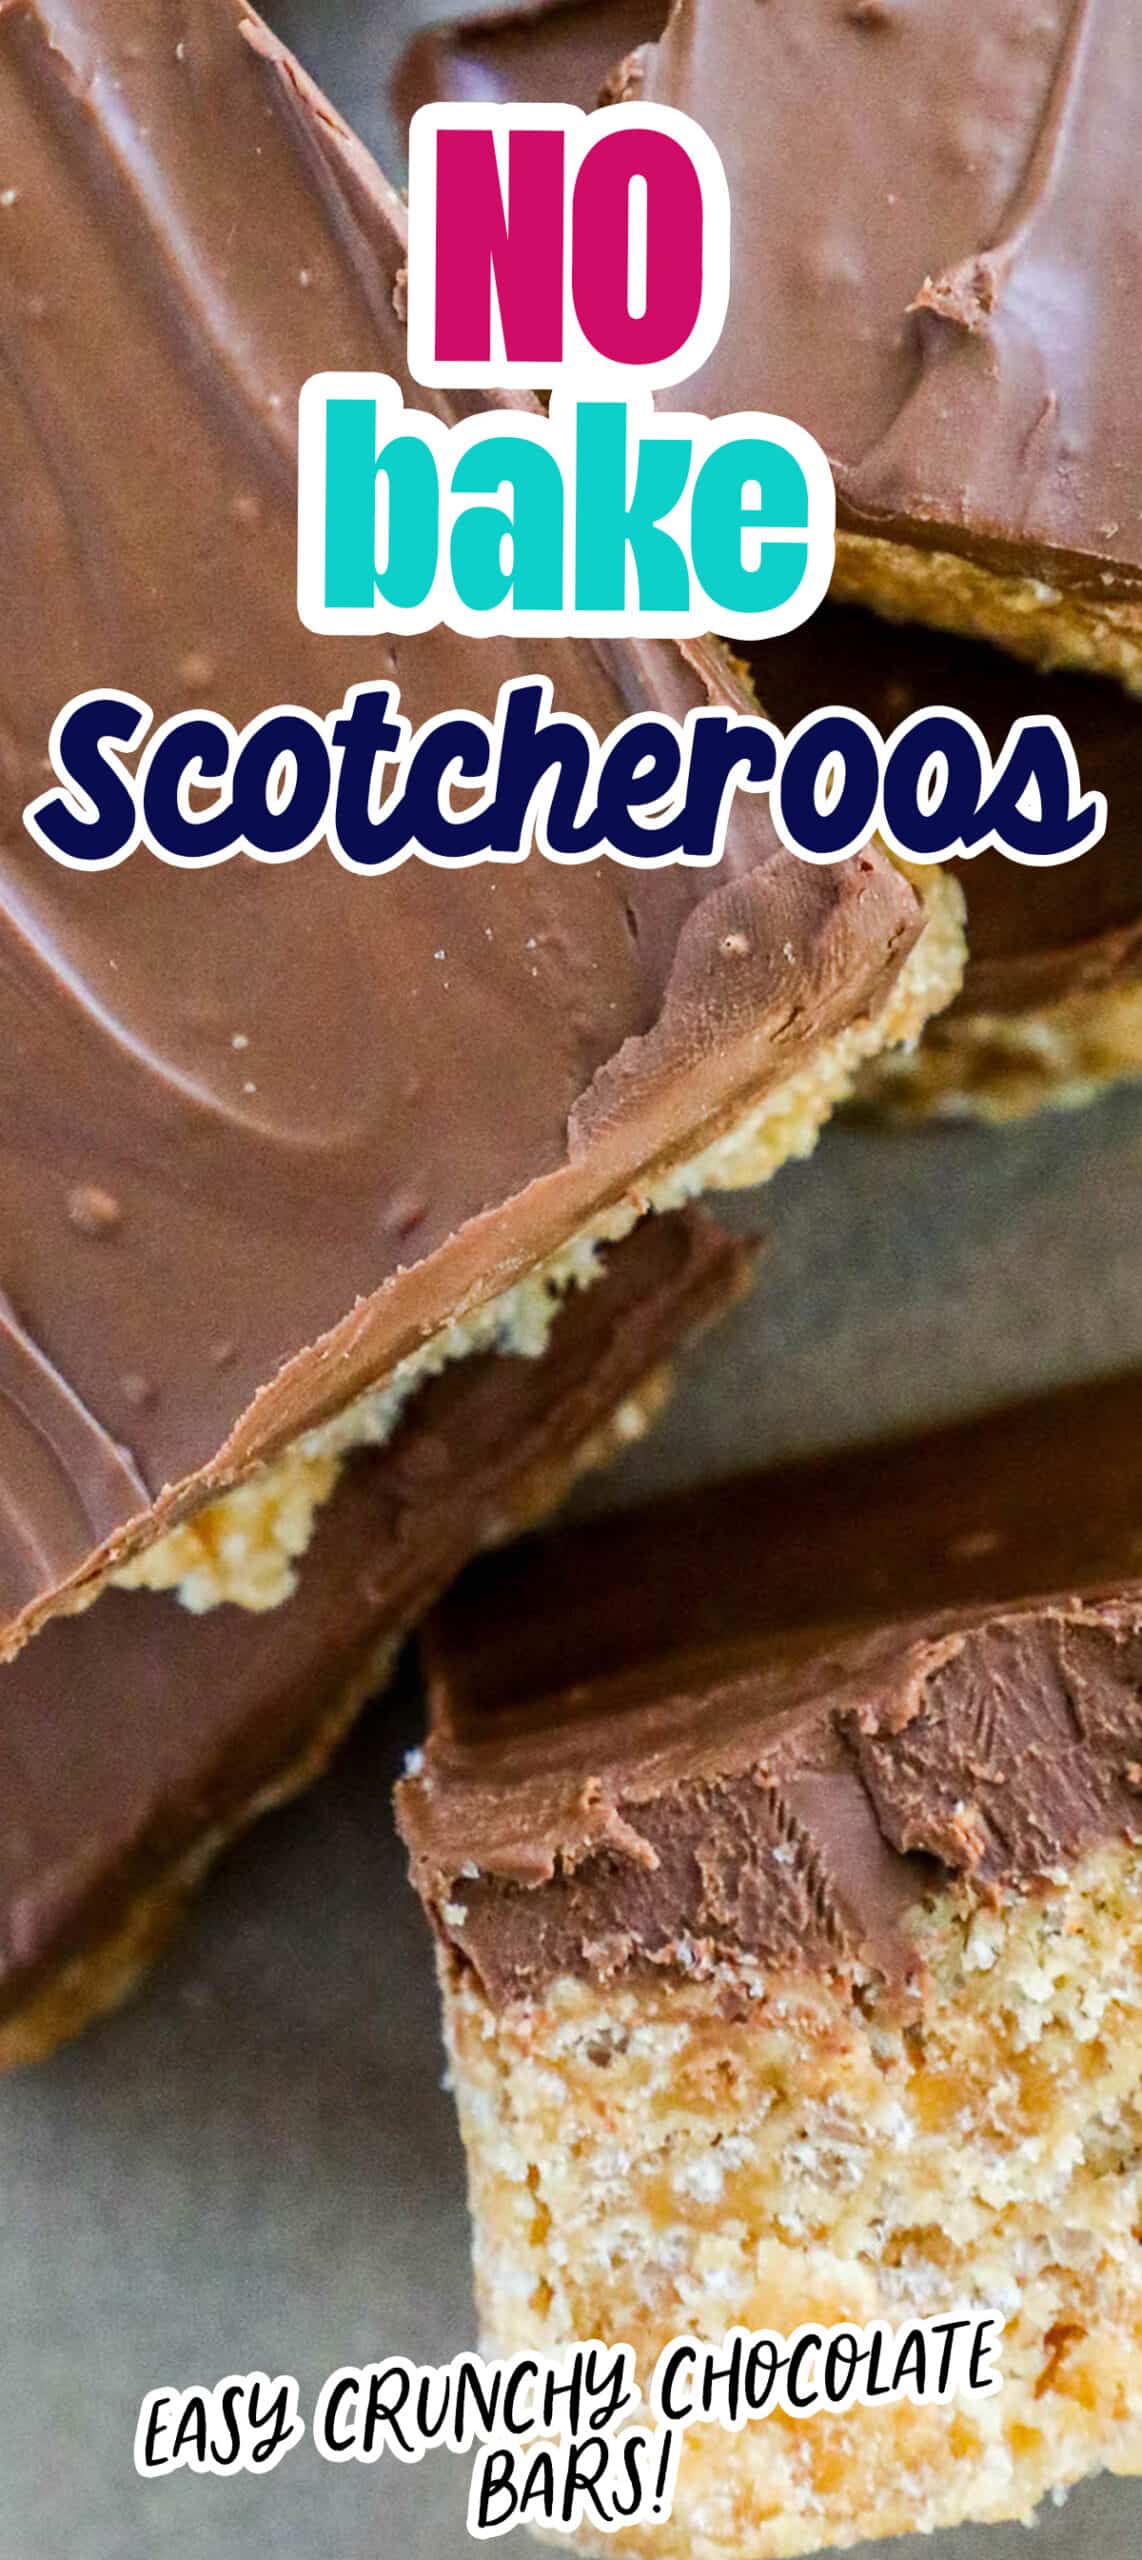 No bake scotcheroos made with chocolate bars.